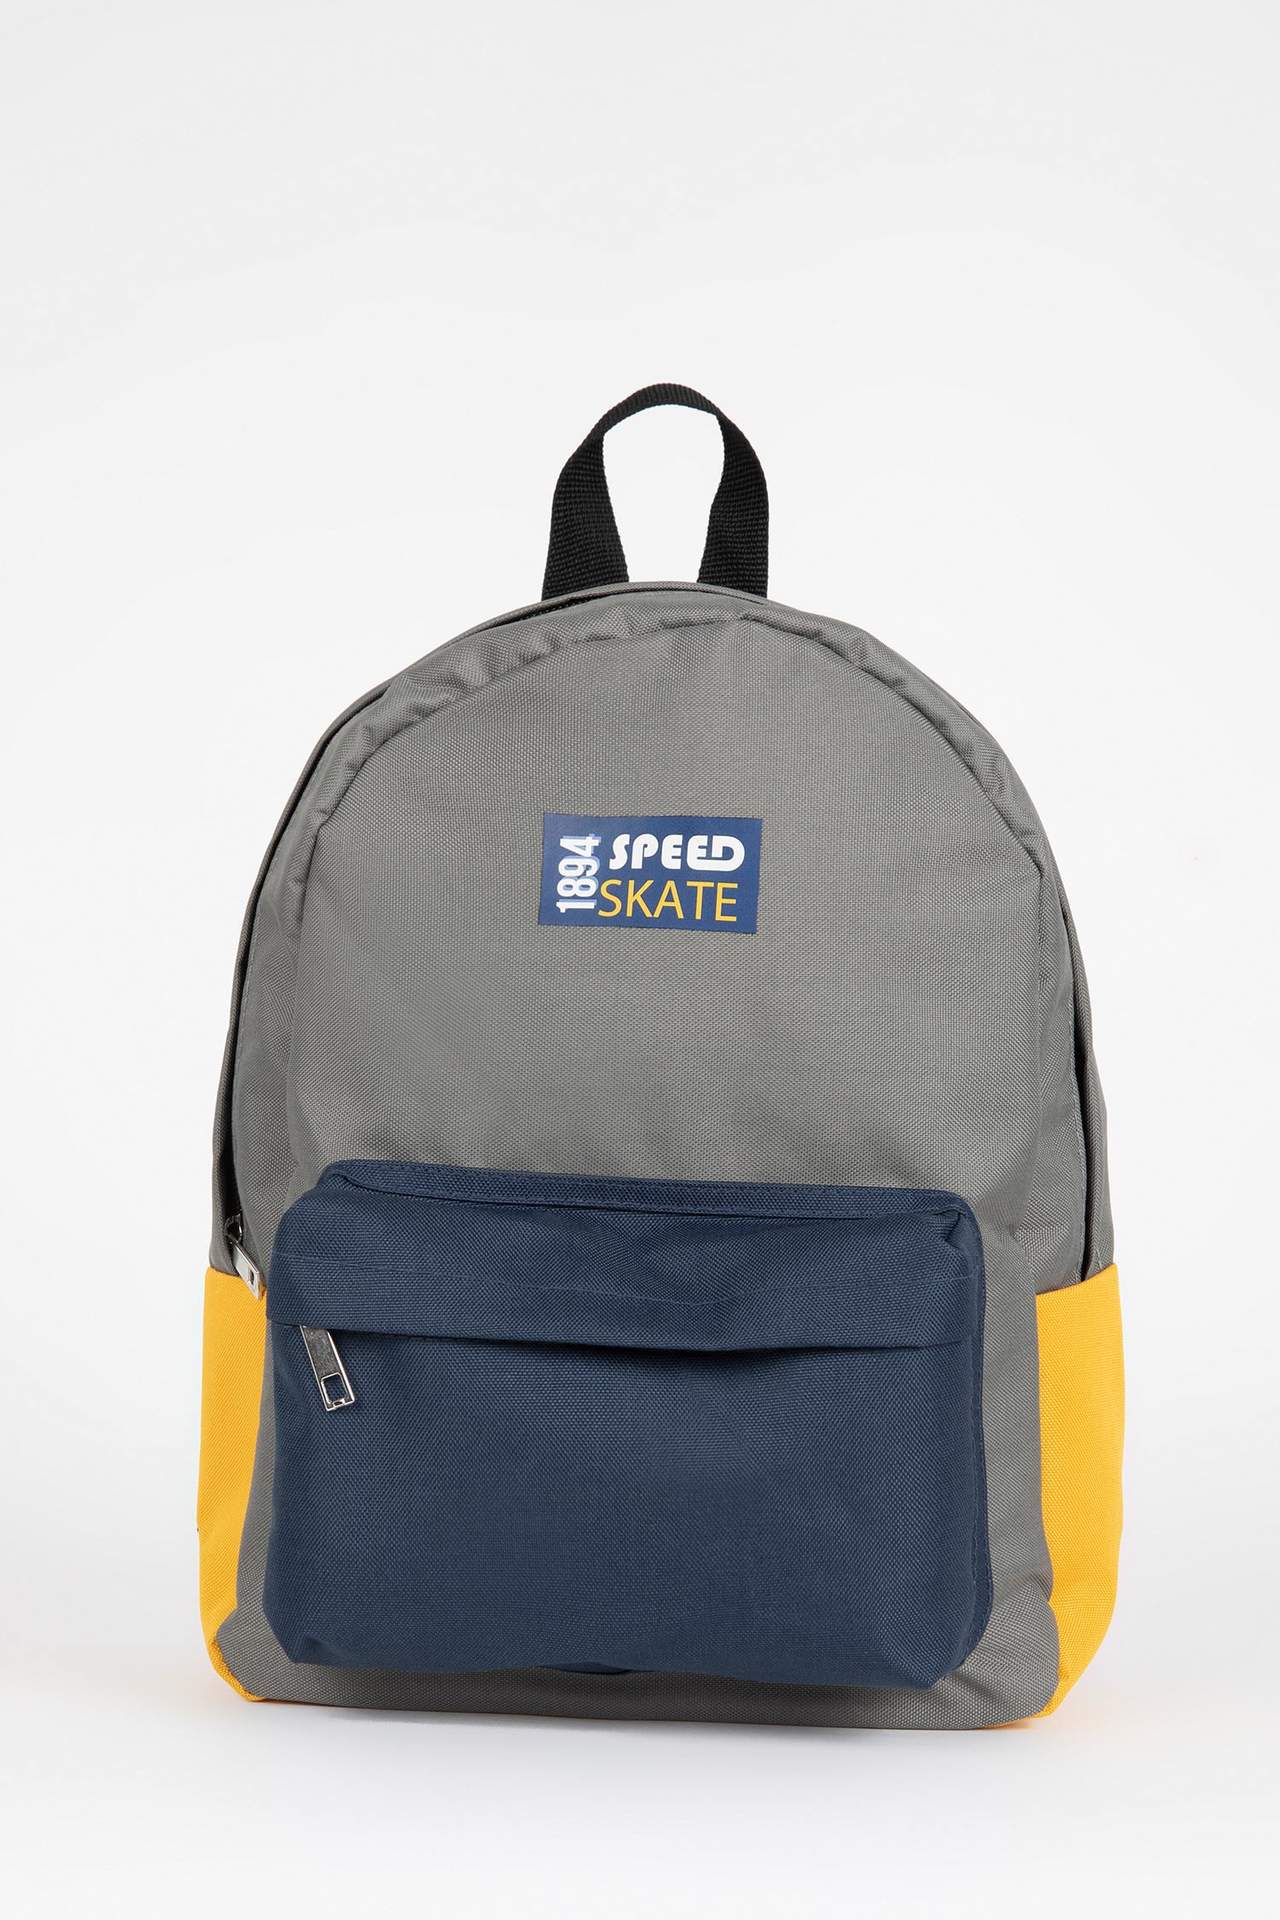 DEFACTO Backpack